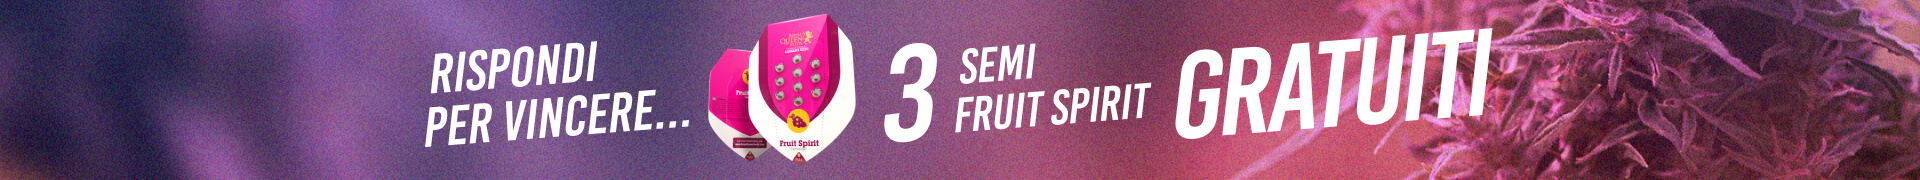 Answer to win 3 FREE Fruit Spirit